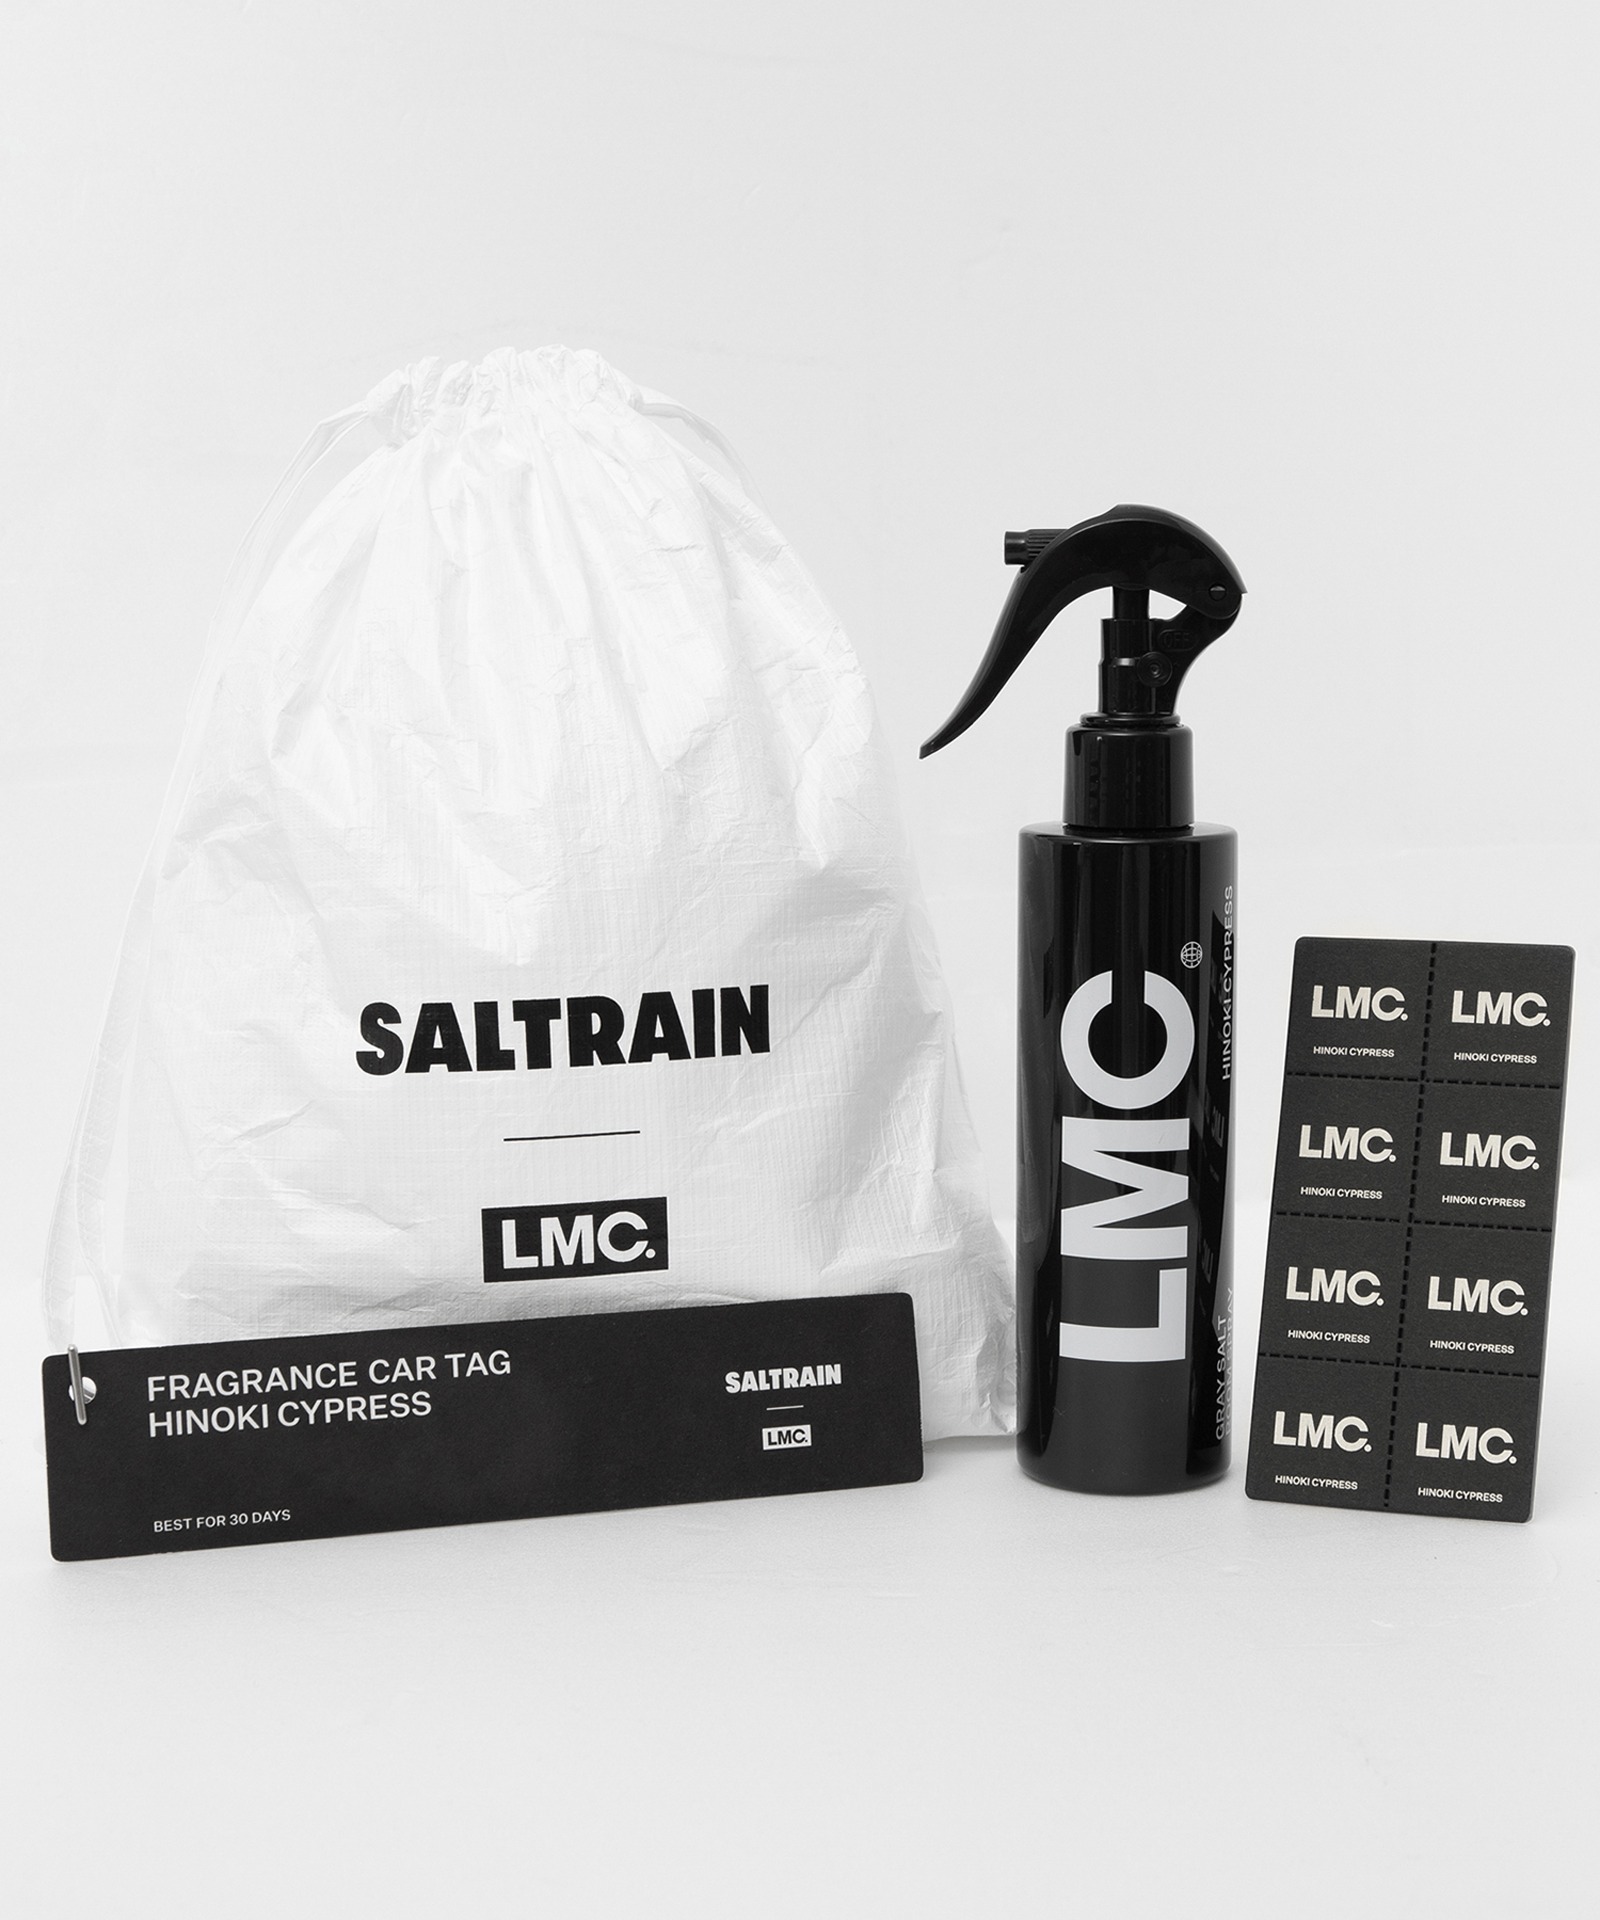 LMC X SALTRAIN FRAGRANCE GIFT SET (HINOKI CYPRESS)